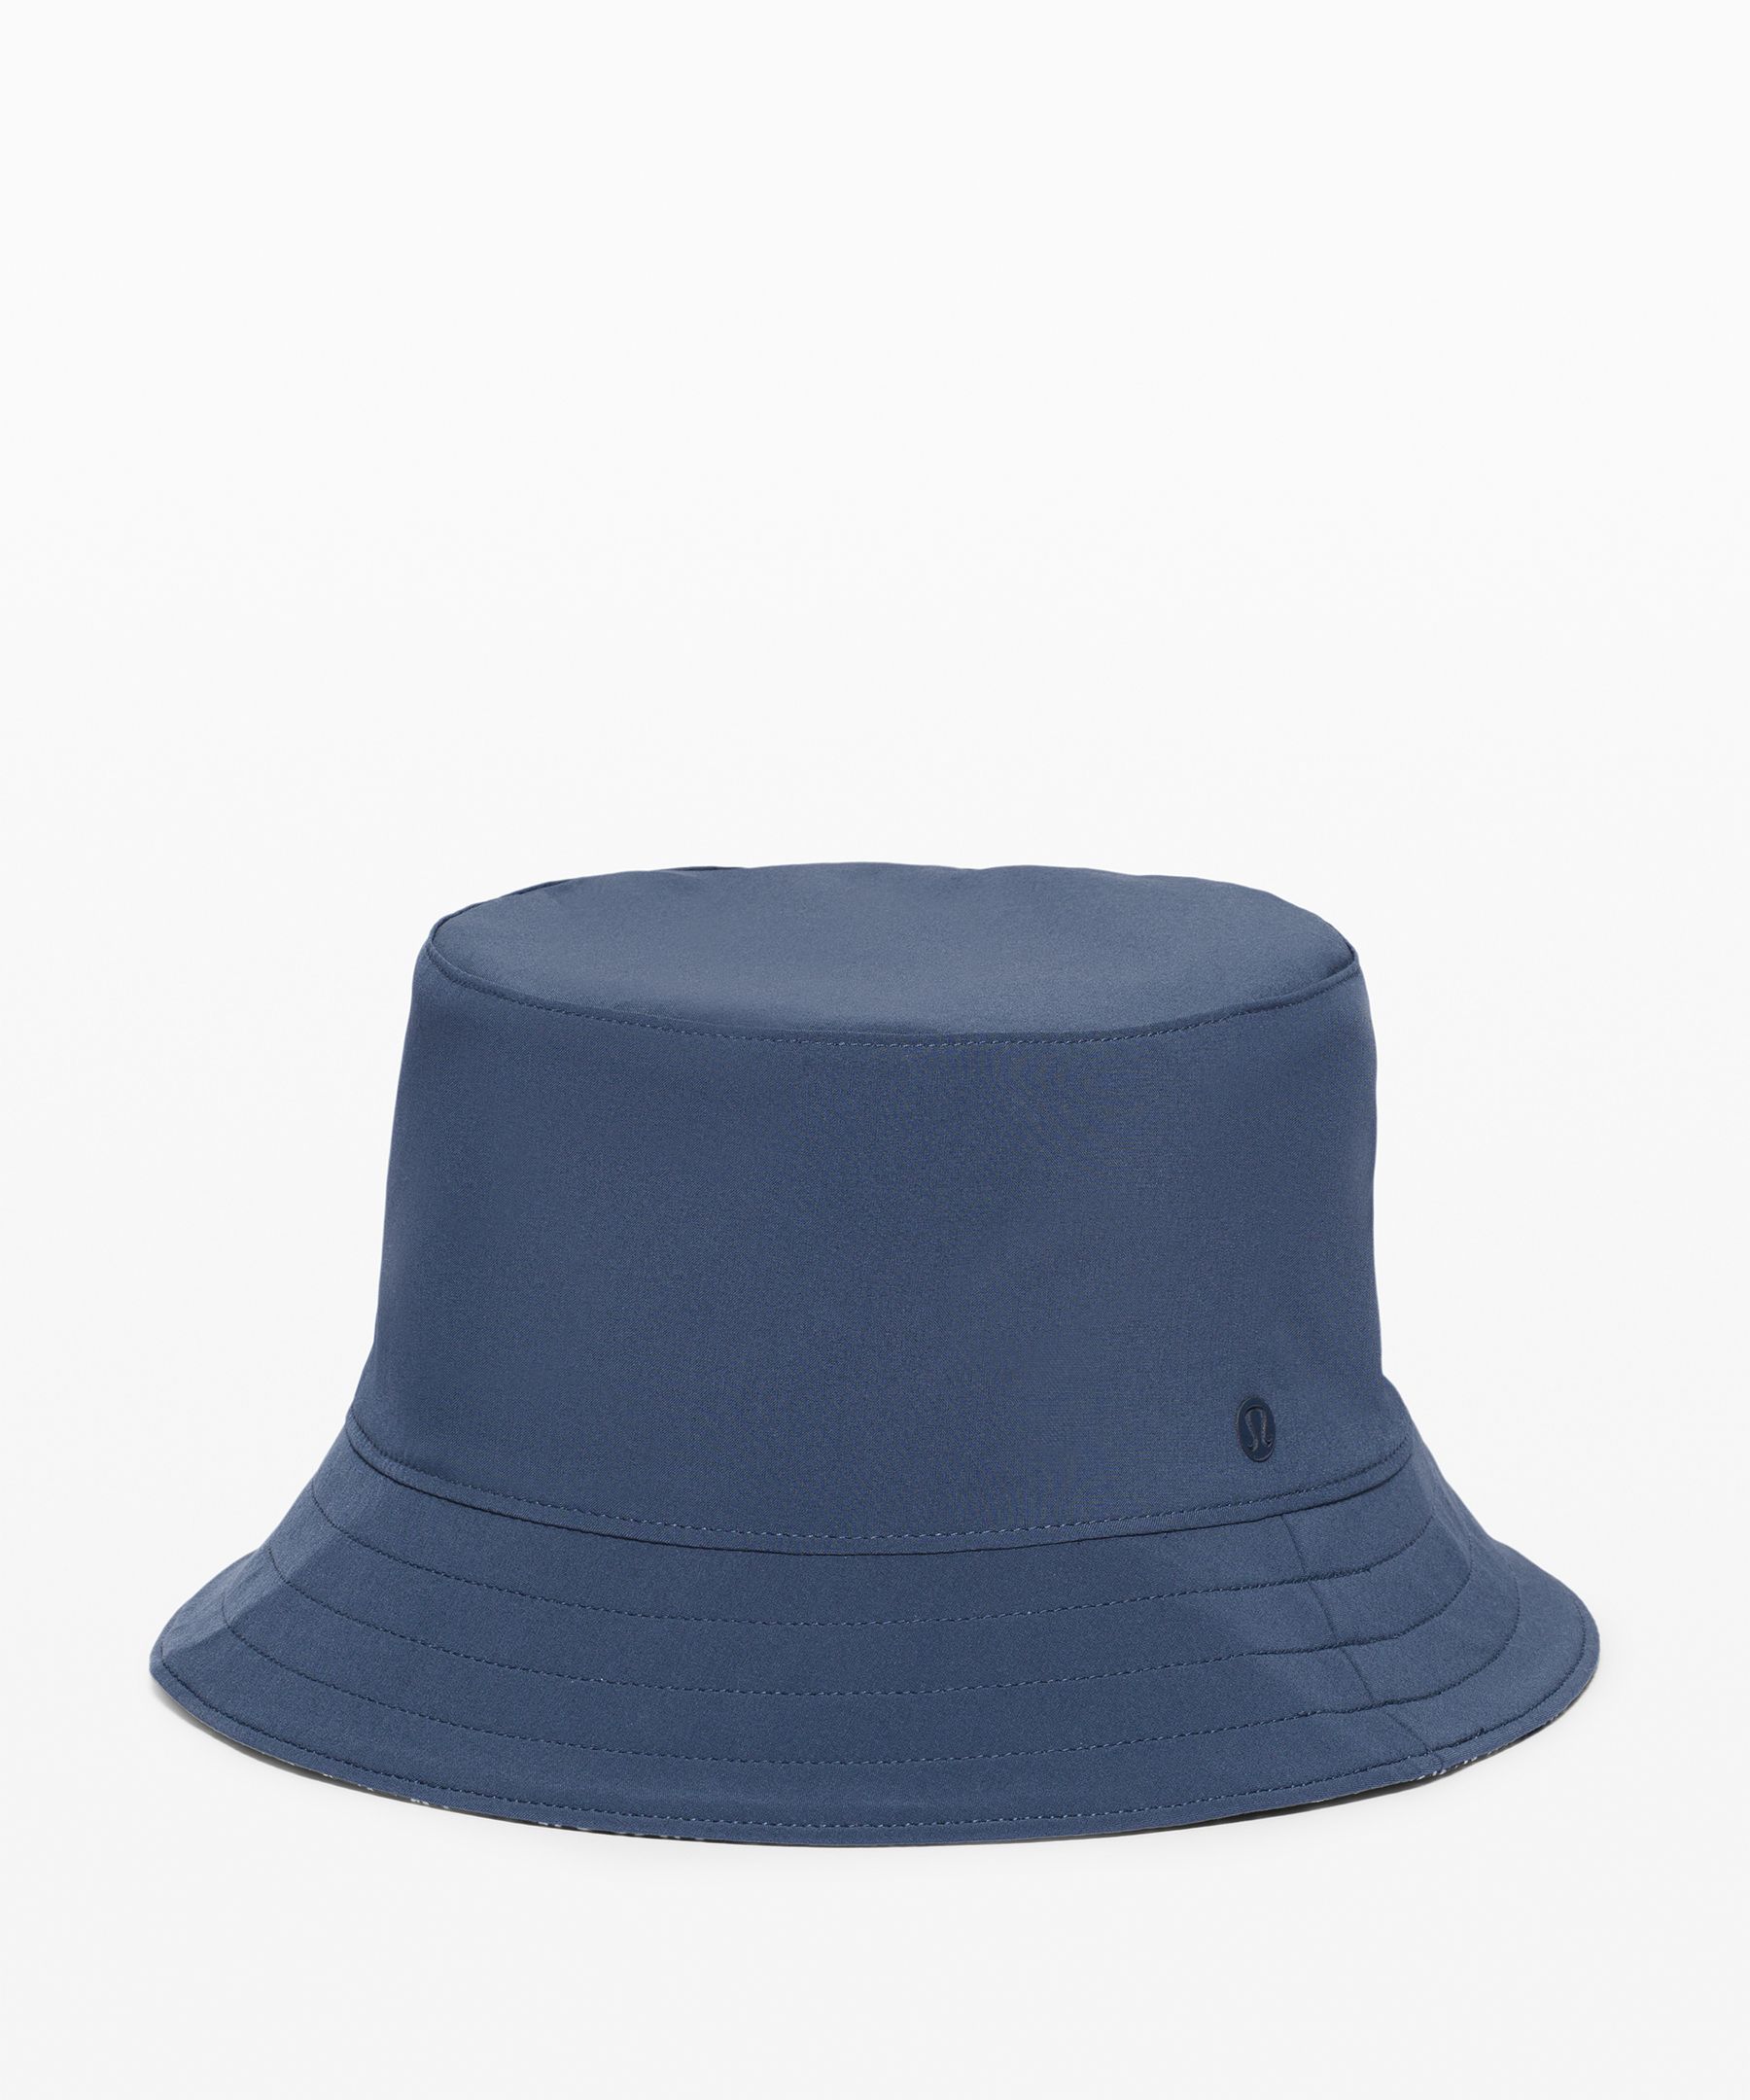 lululemon bucket hat review